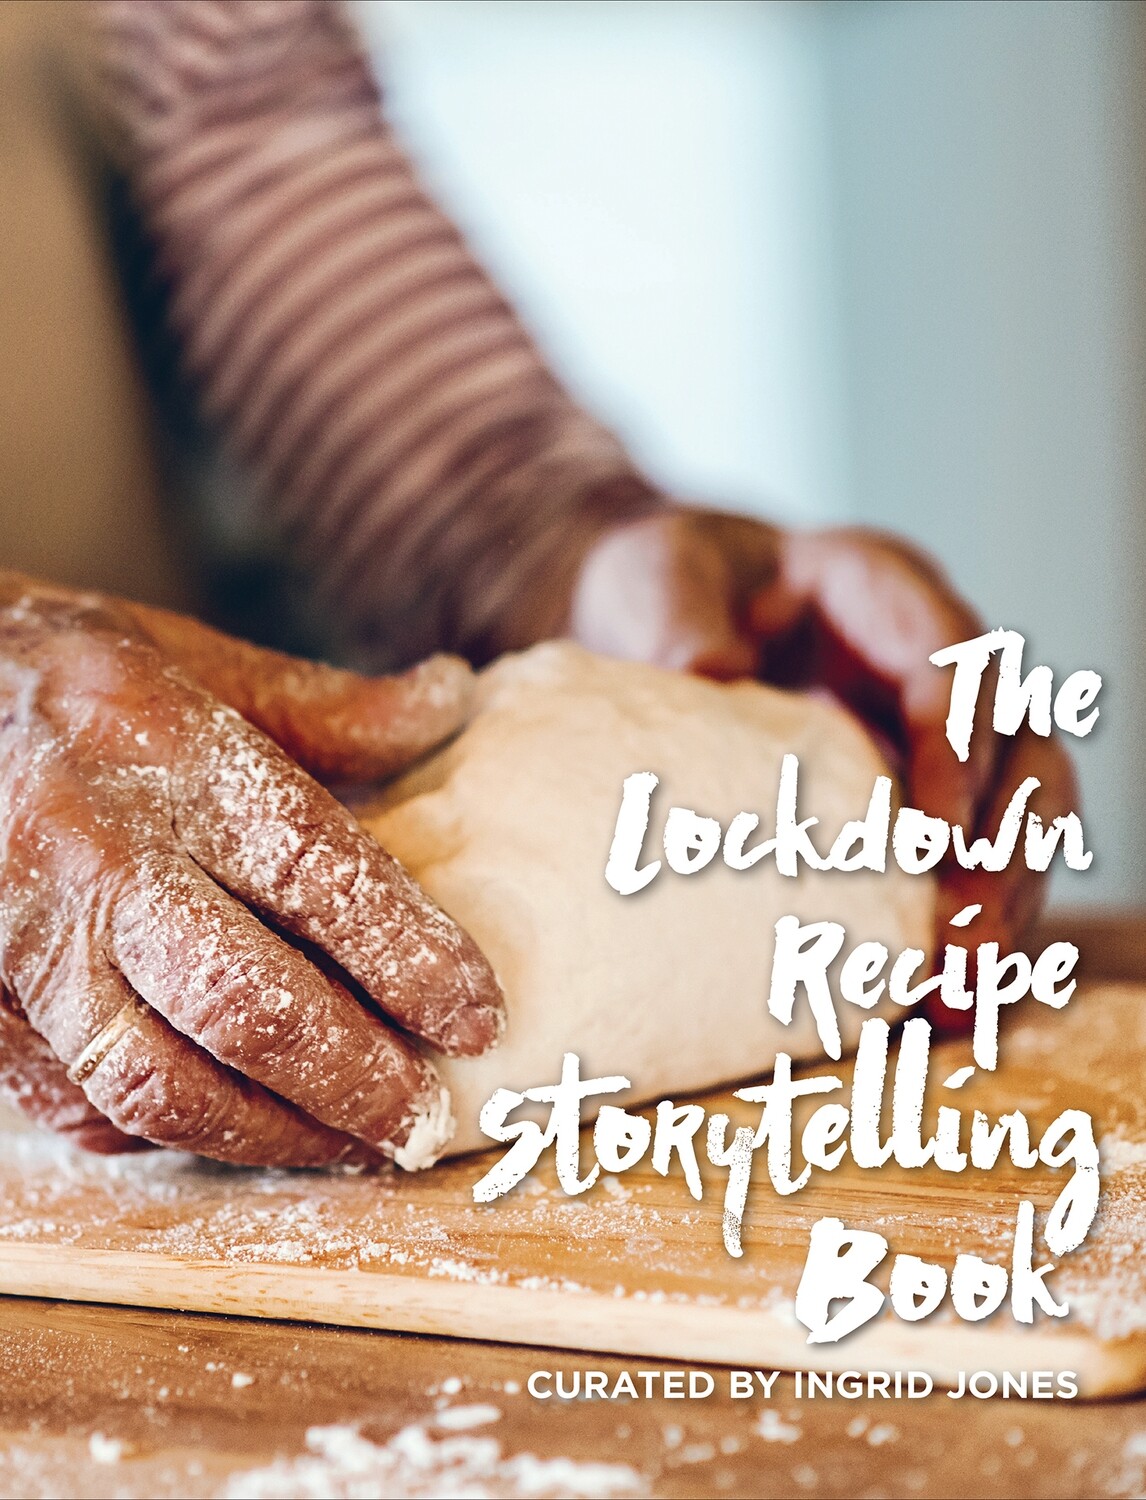 The Lockdown Recipe Storytelling Book